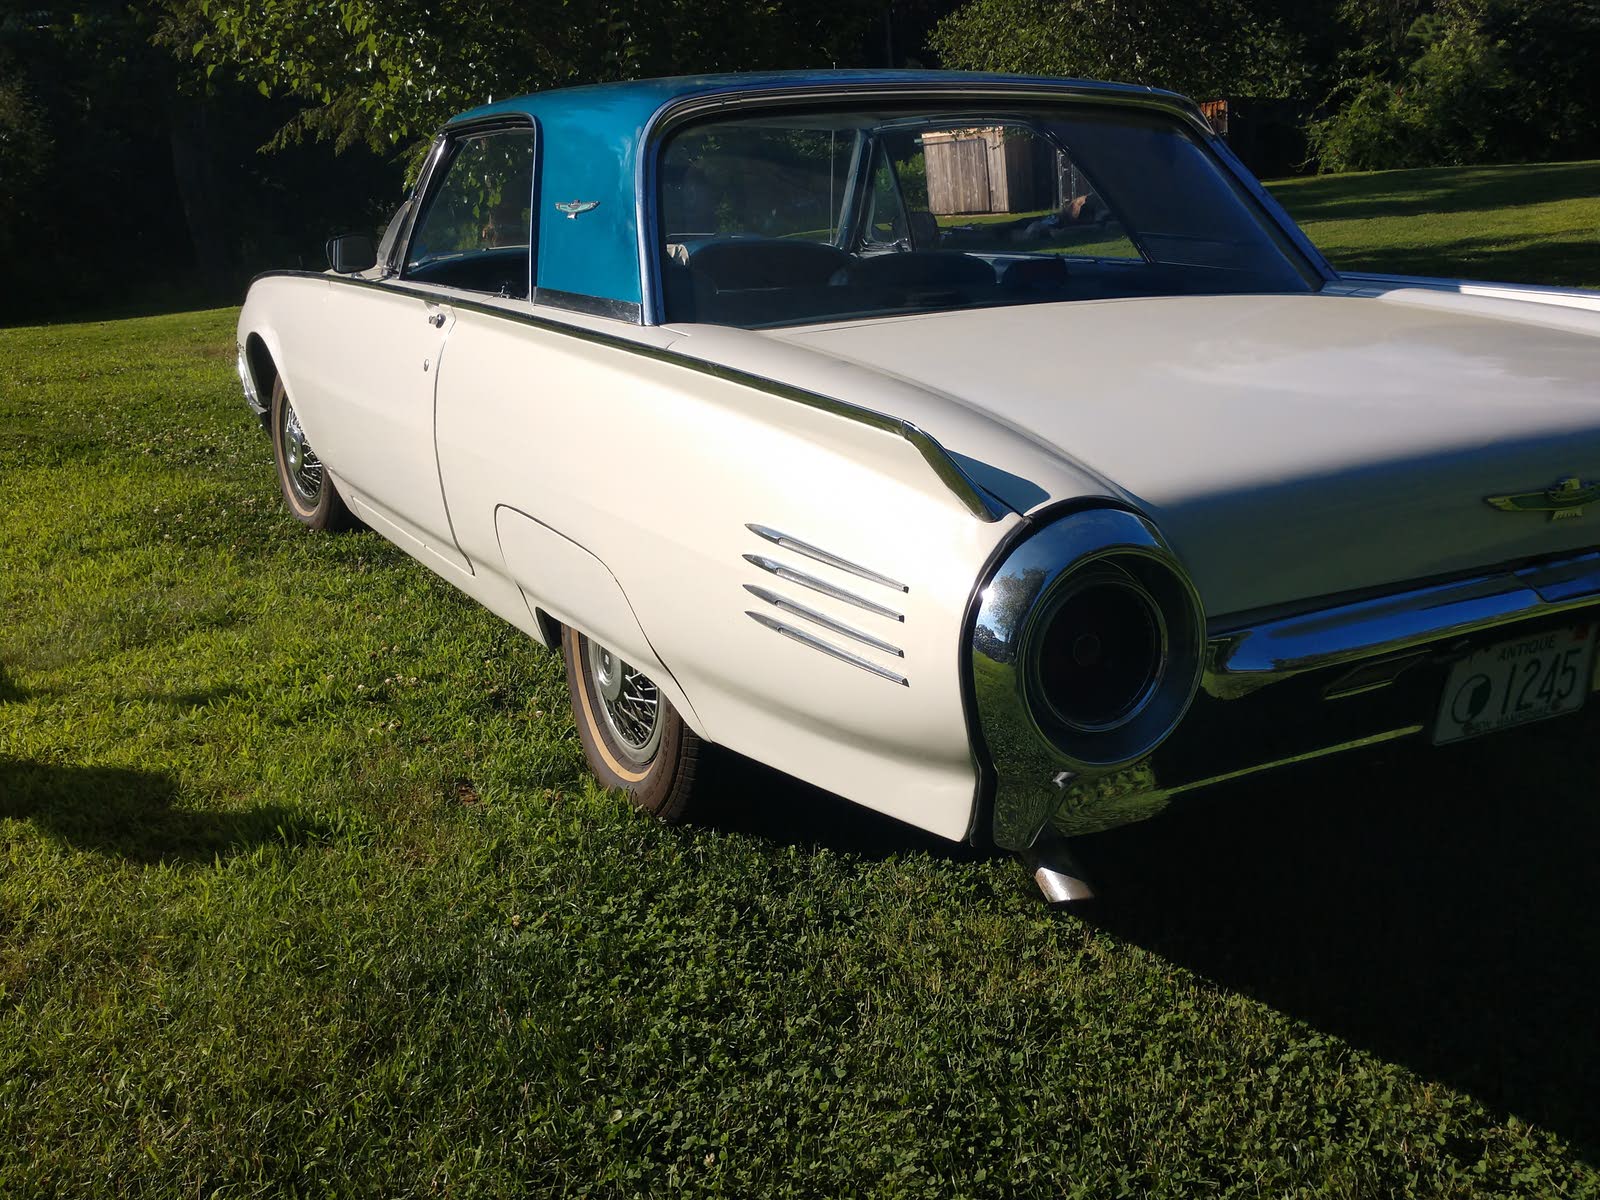 1961 ford thunderbird for sale